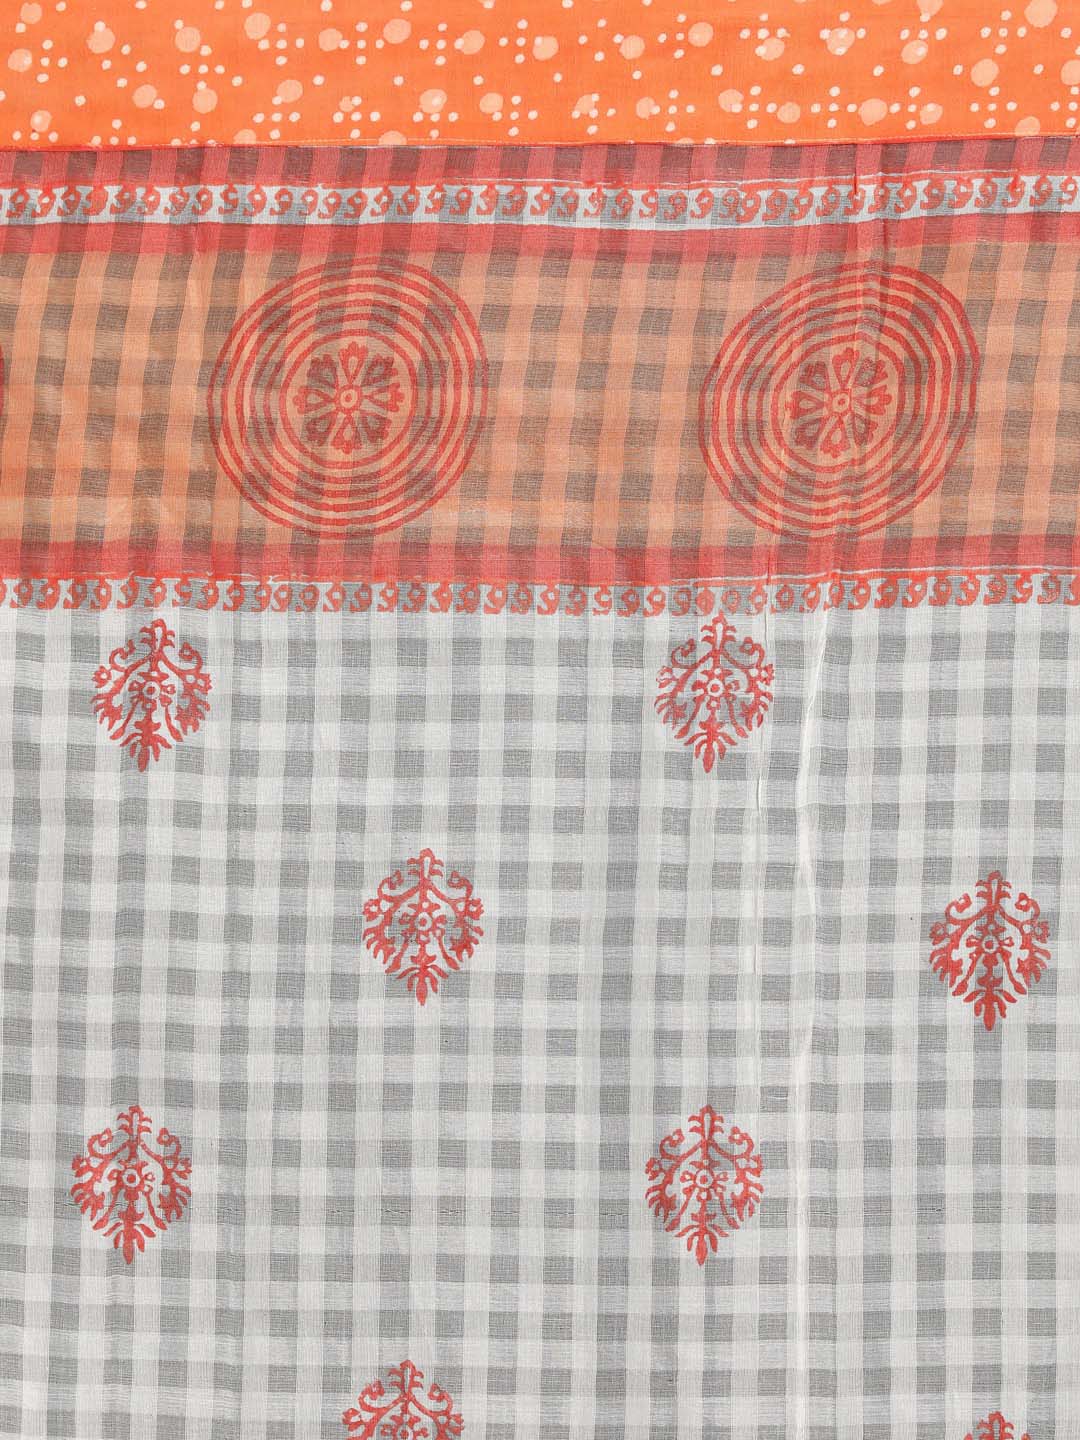 Indethnic Printed Cotton Blend Saree in orange - Saree Detail View